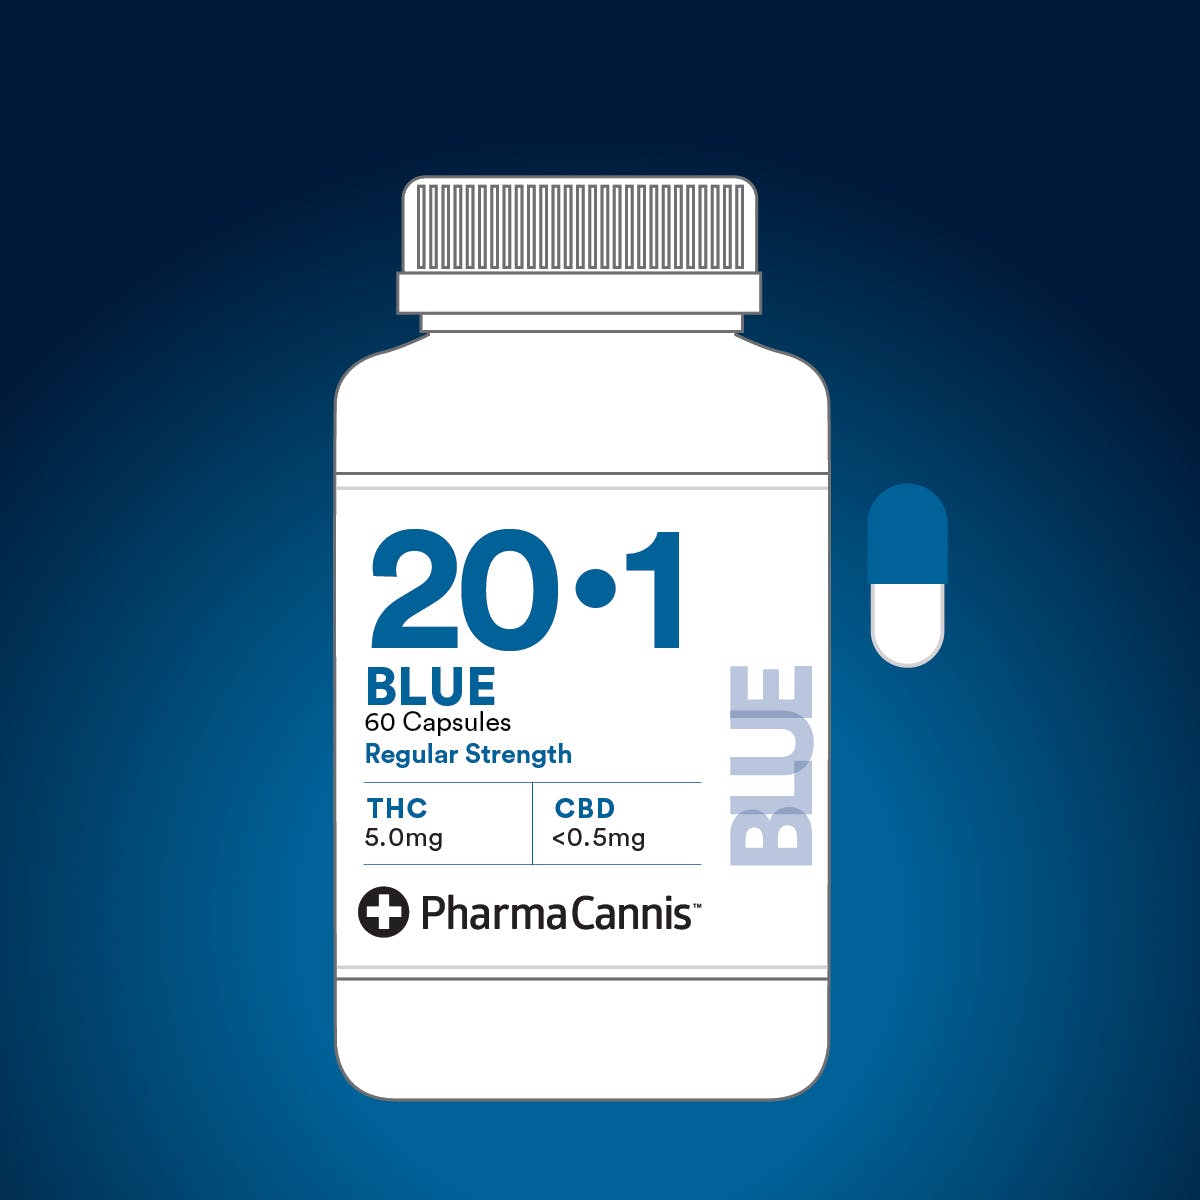 marijuana-dispensaries-pharmacannis-amherst-in-amherst-blue-regular-strength-capsule-201-60ct